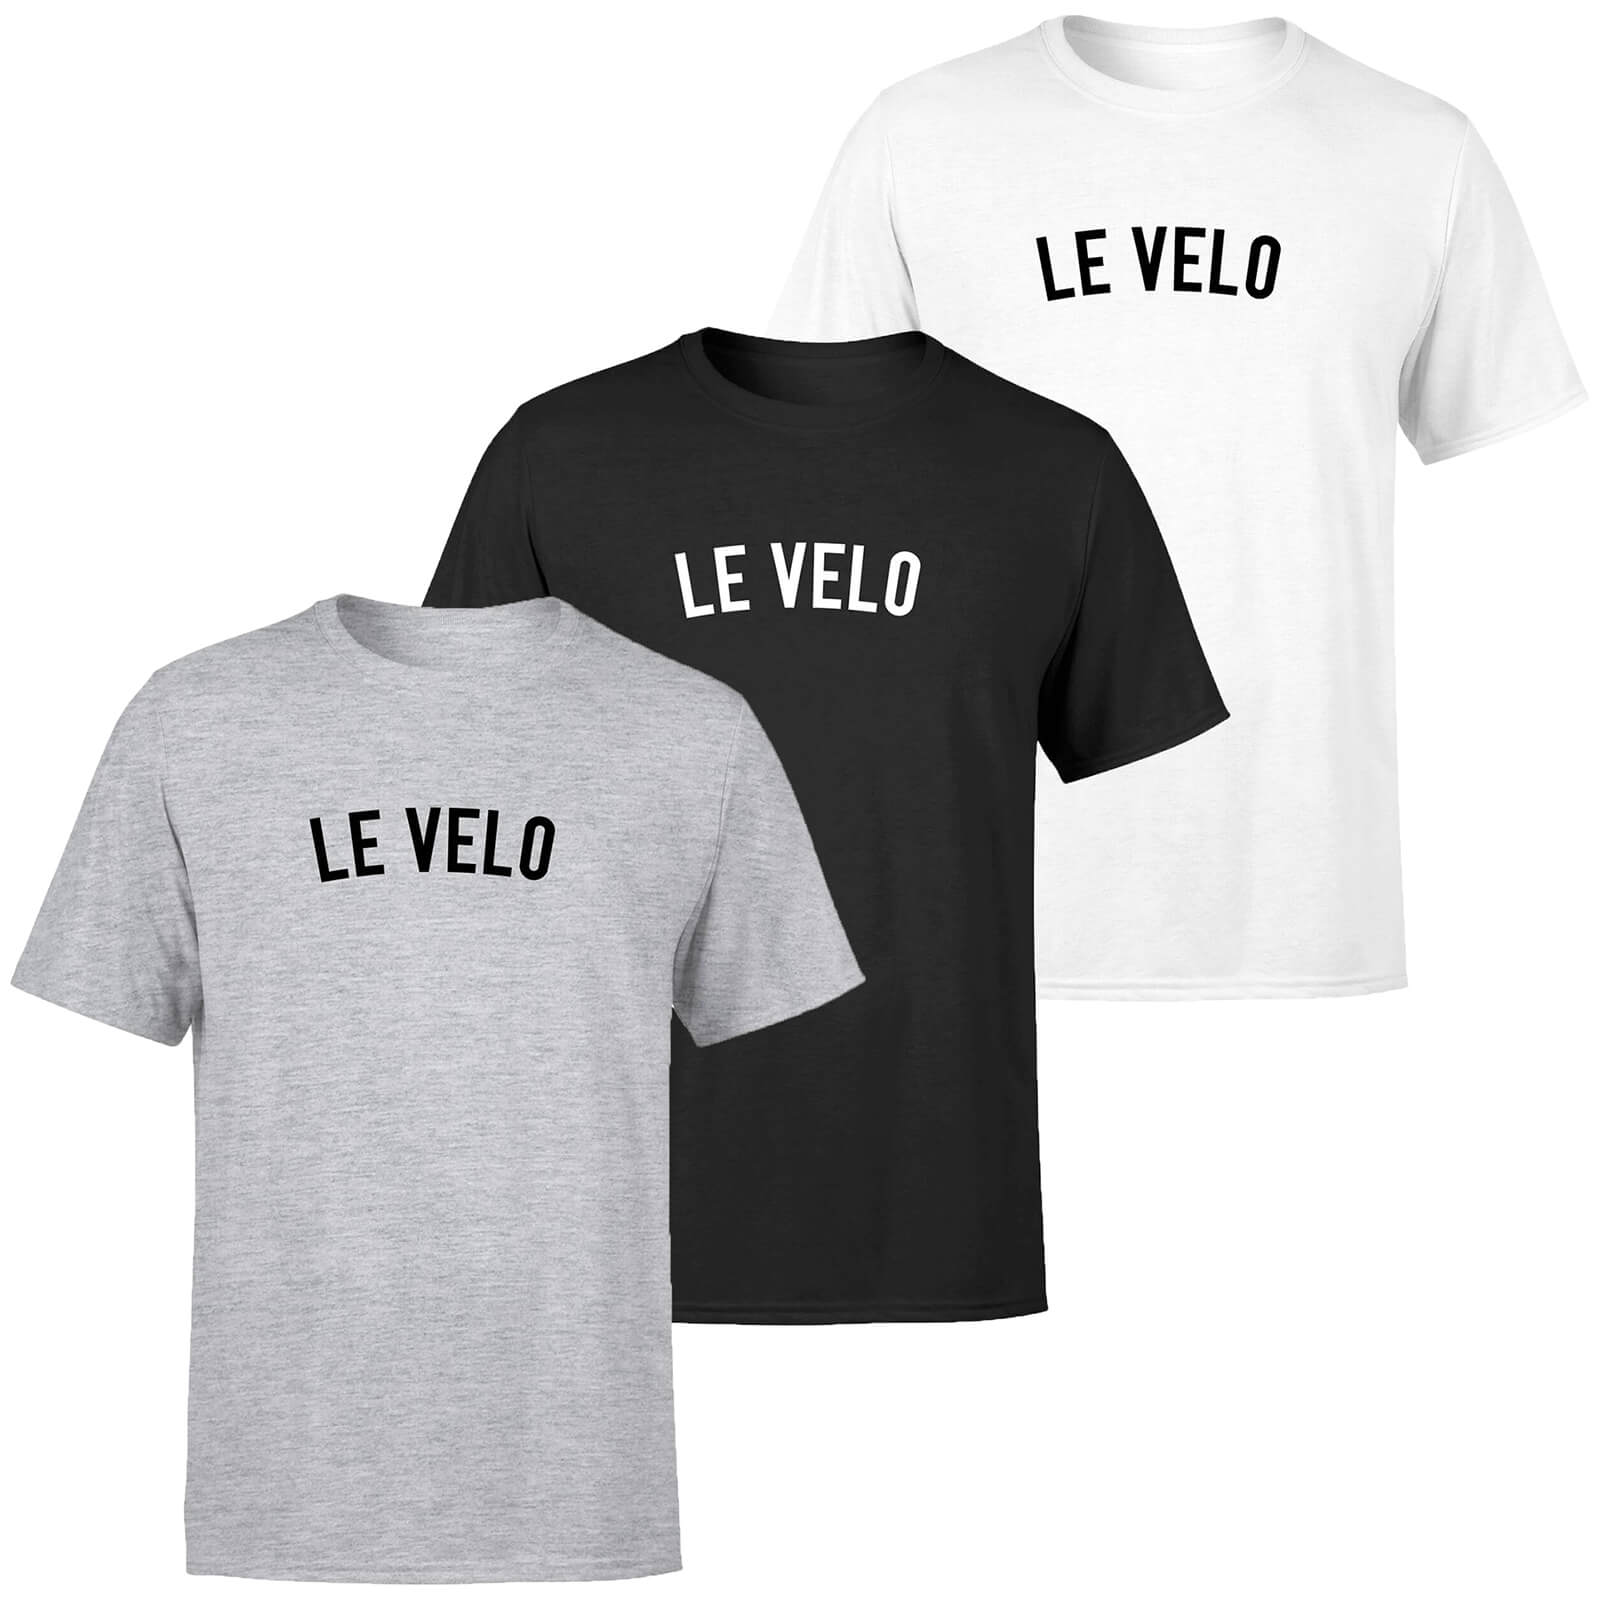 Le Velo Men's T-Shirt - XL - White